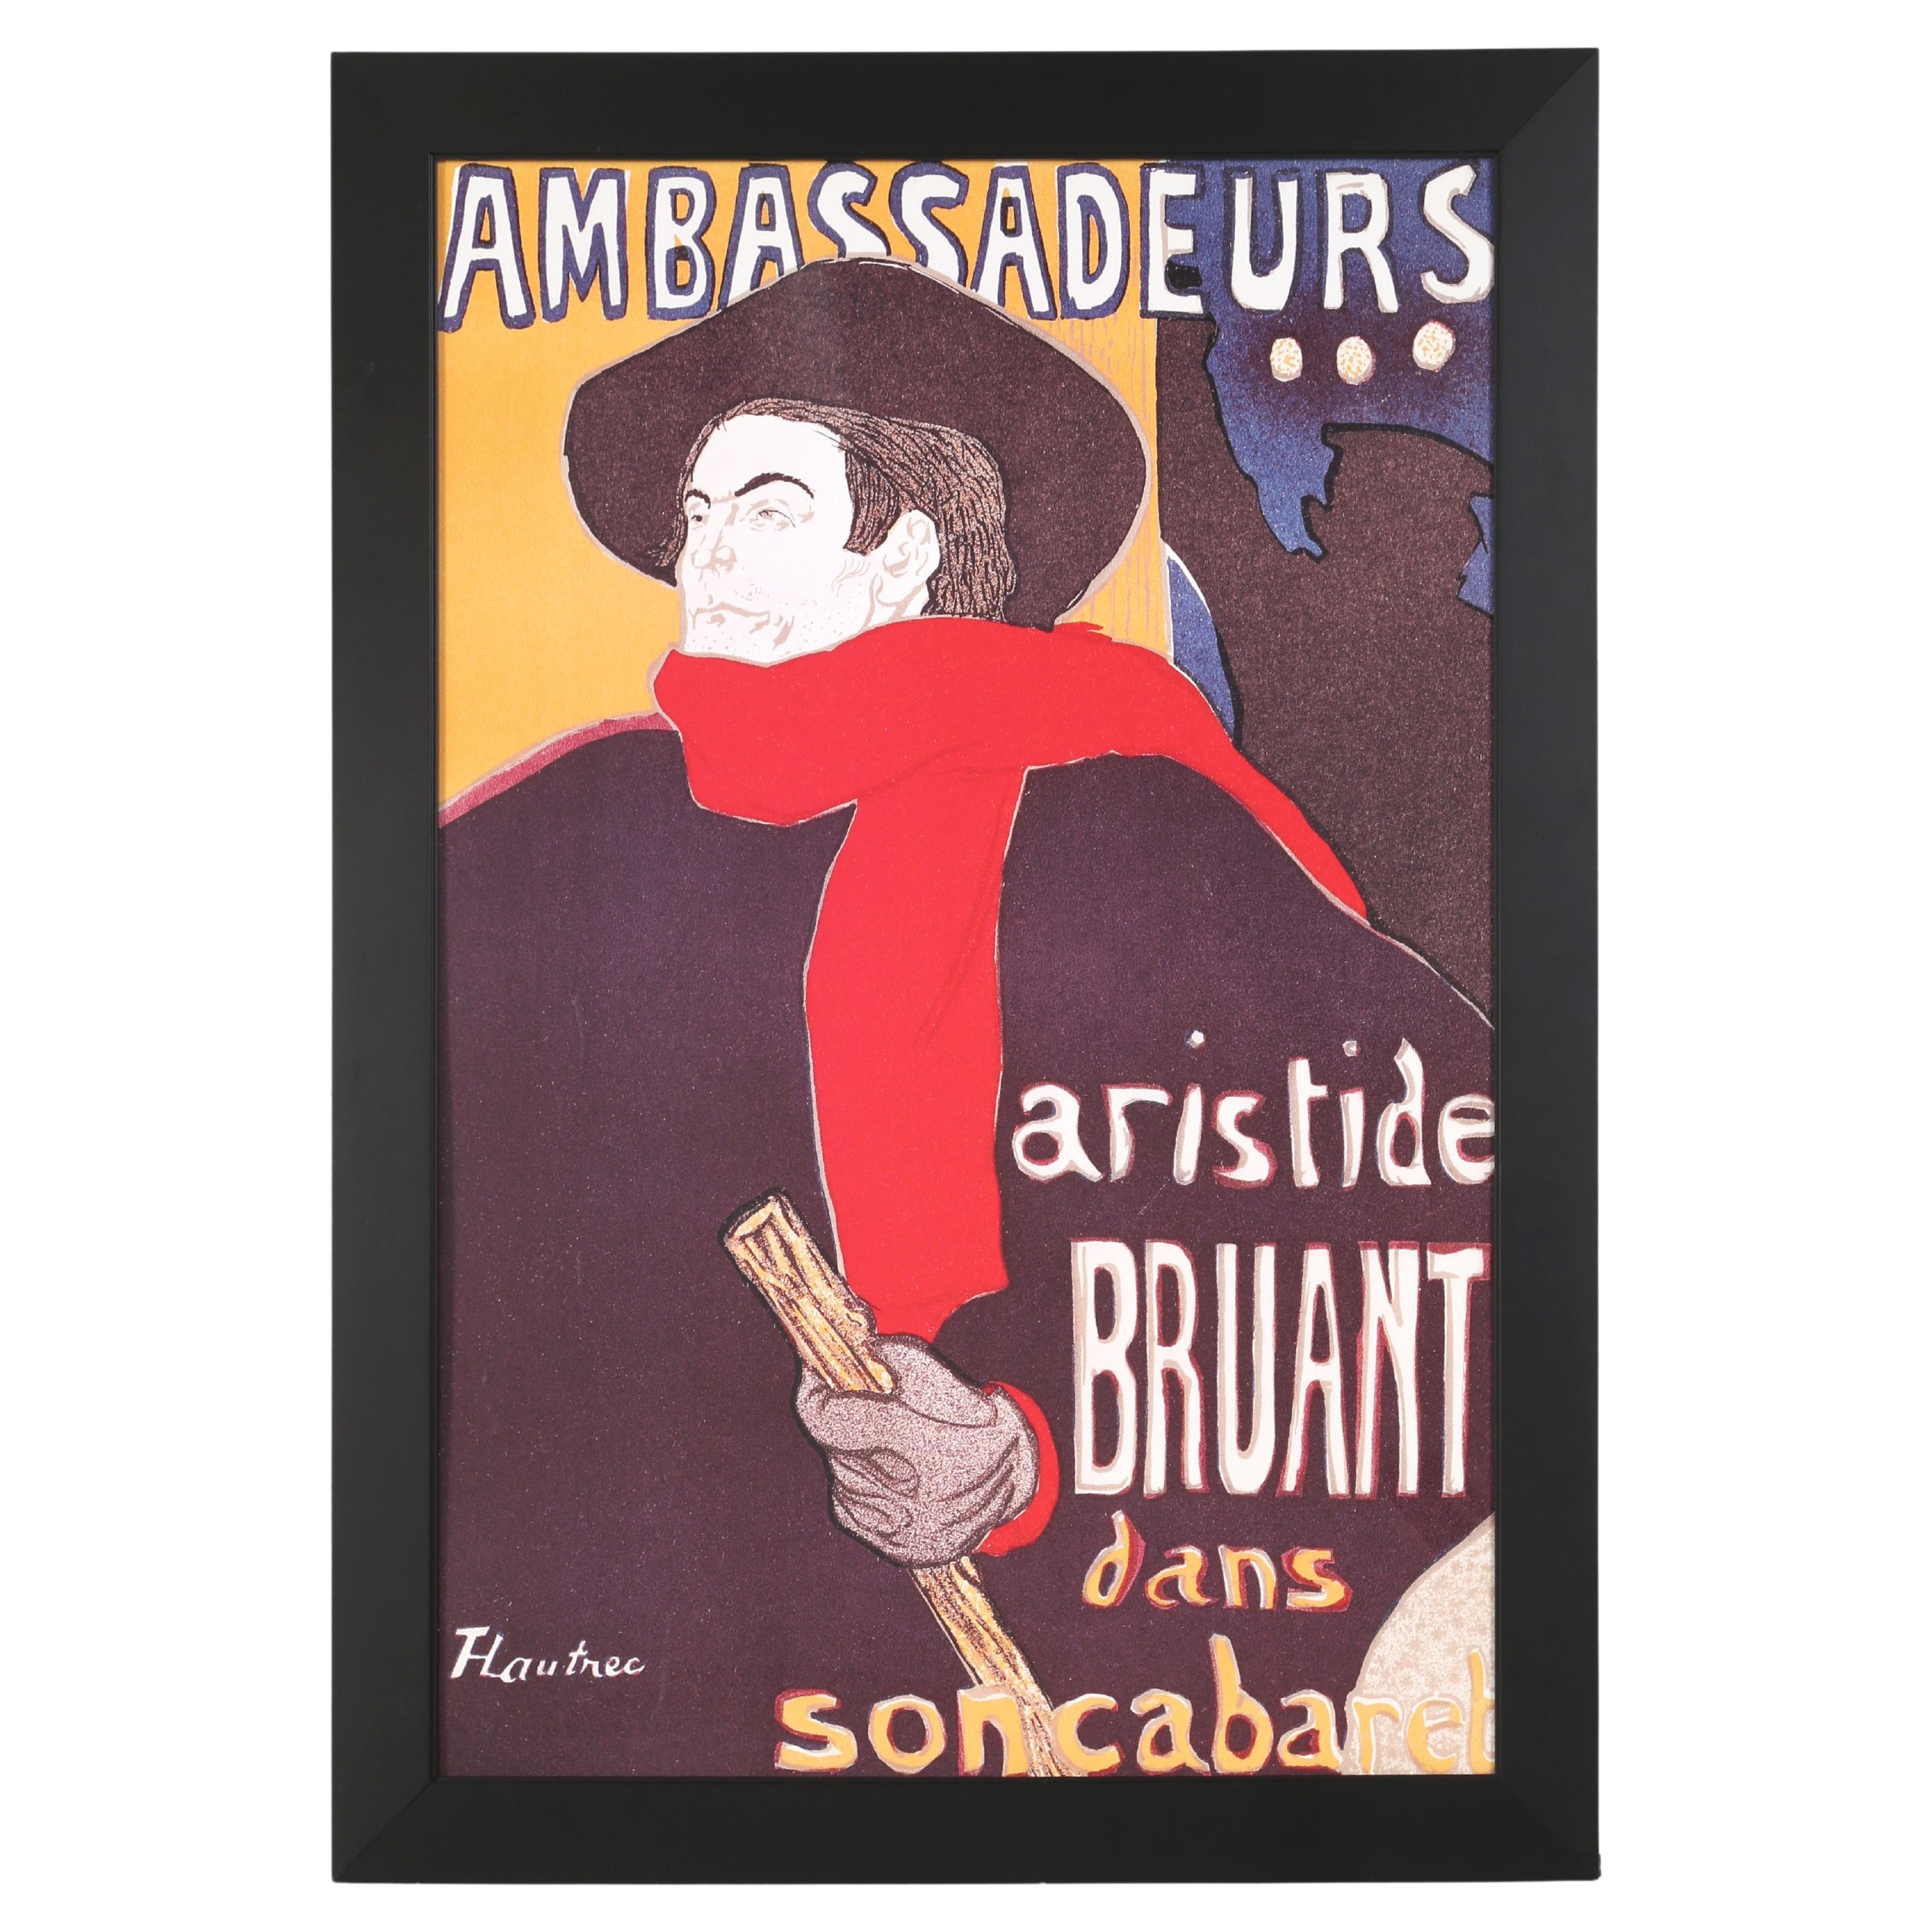 Ambassadeurs: Aristide Bruant Originally by Toulouse-Lautrec 1982 Reproduction For Sale